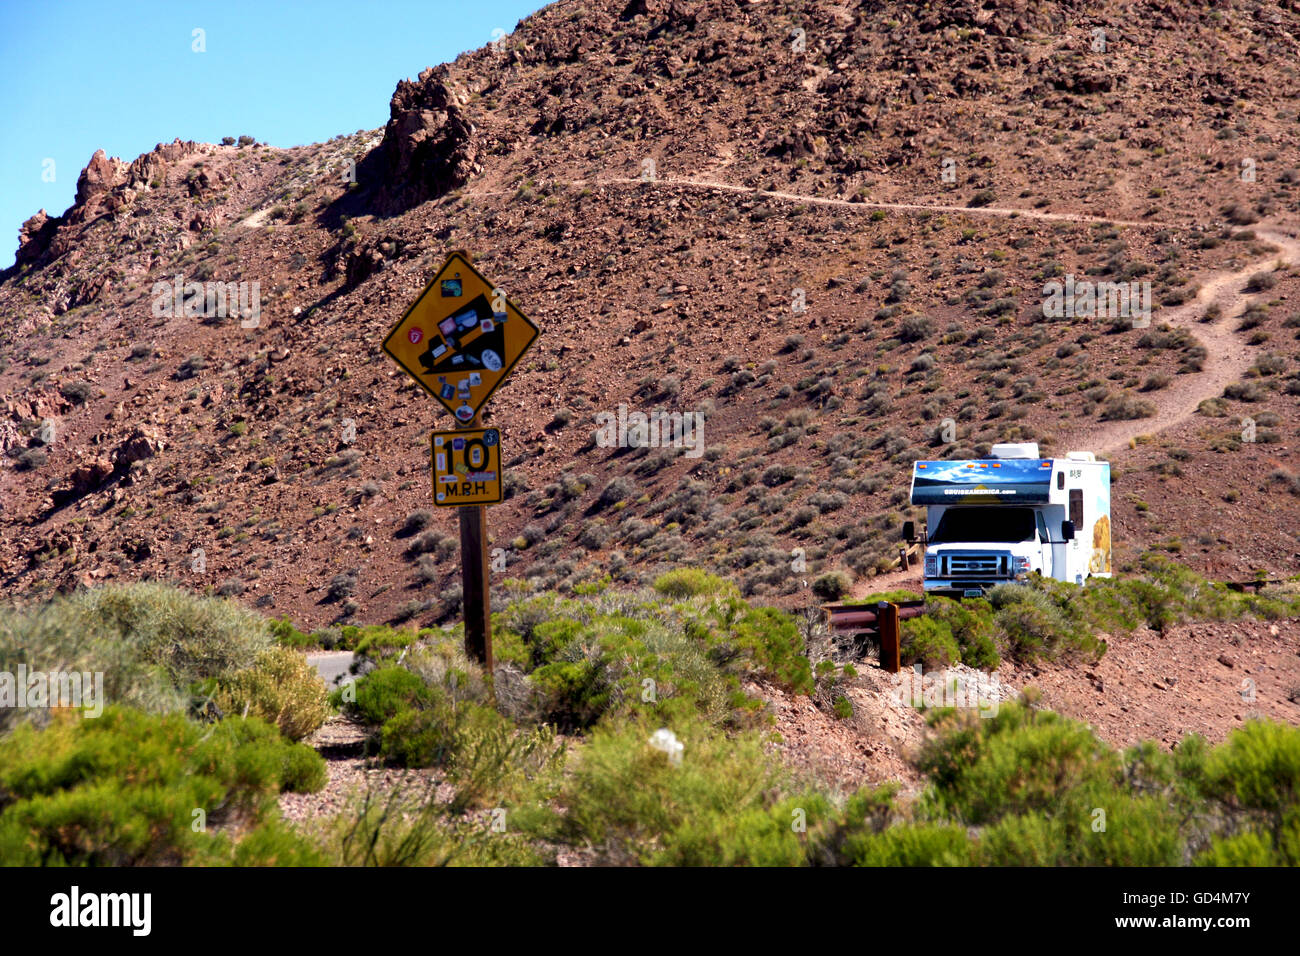 Rental RV Driving on Mountain Road Stock Photo